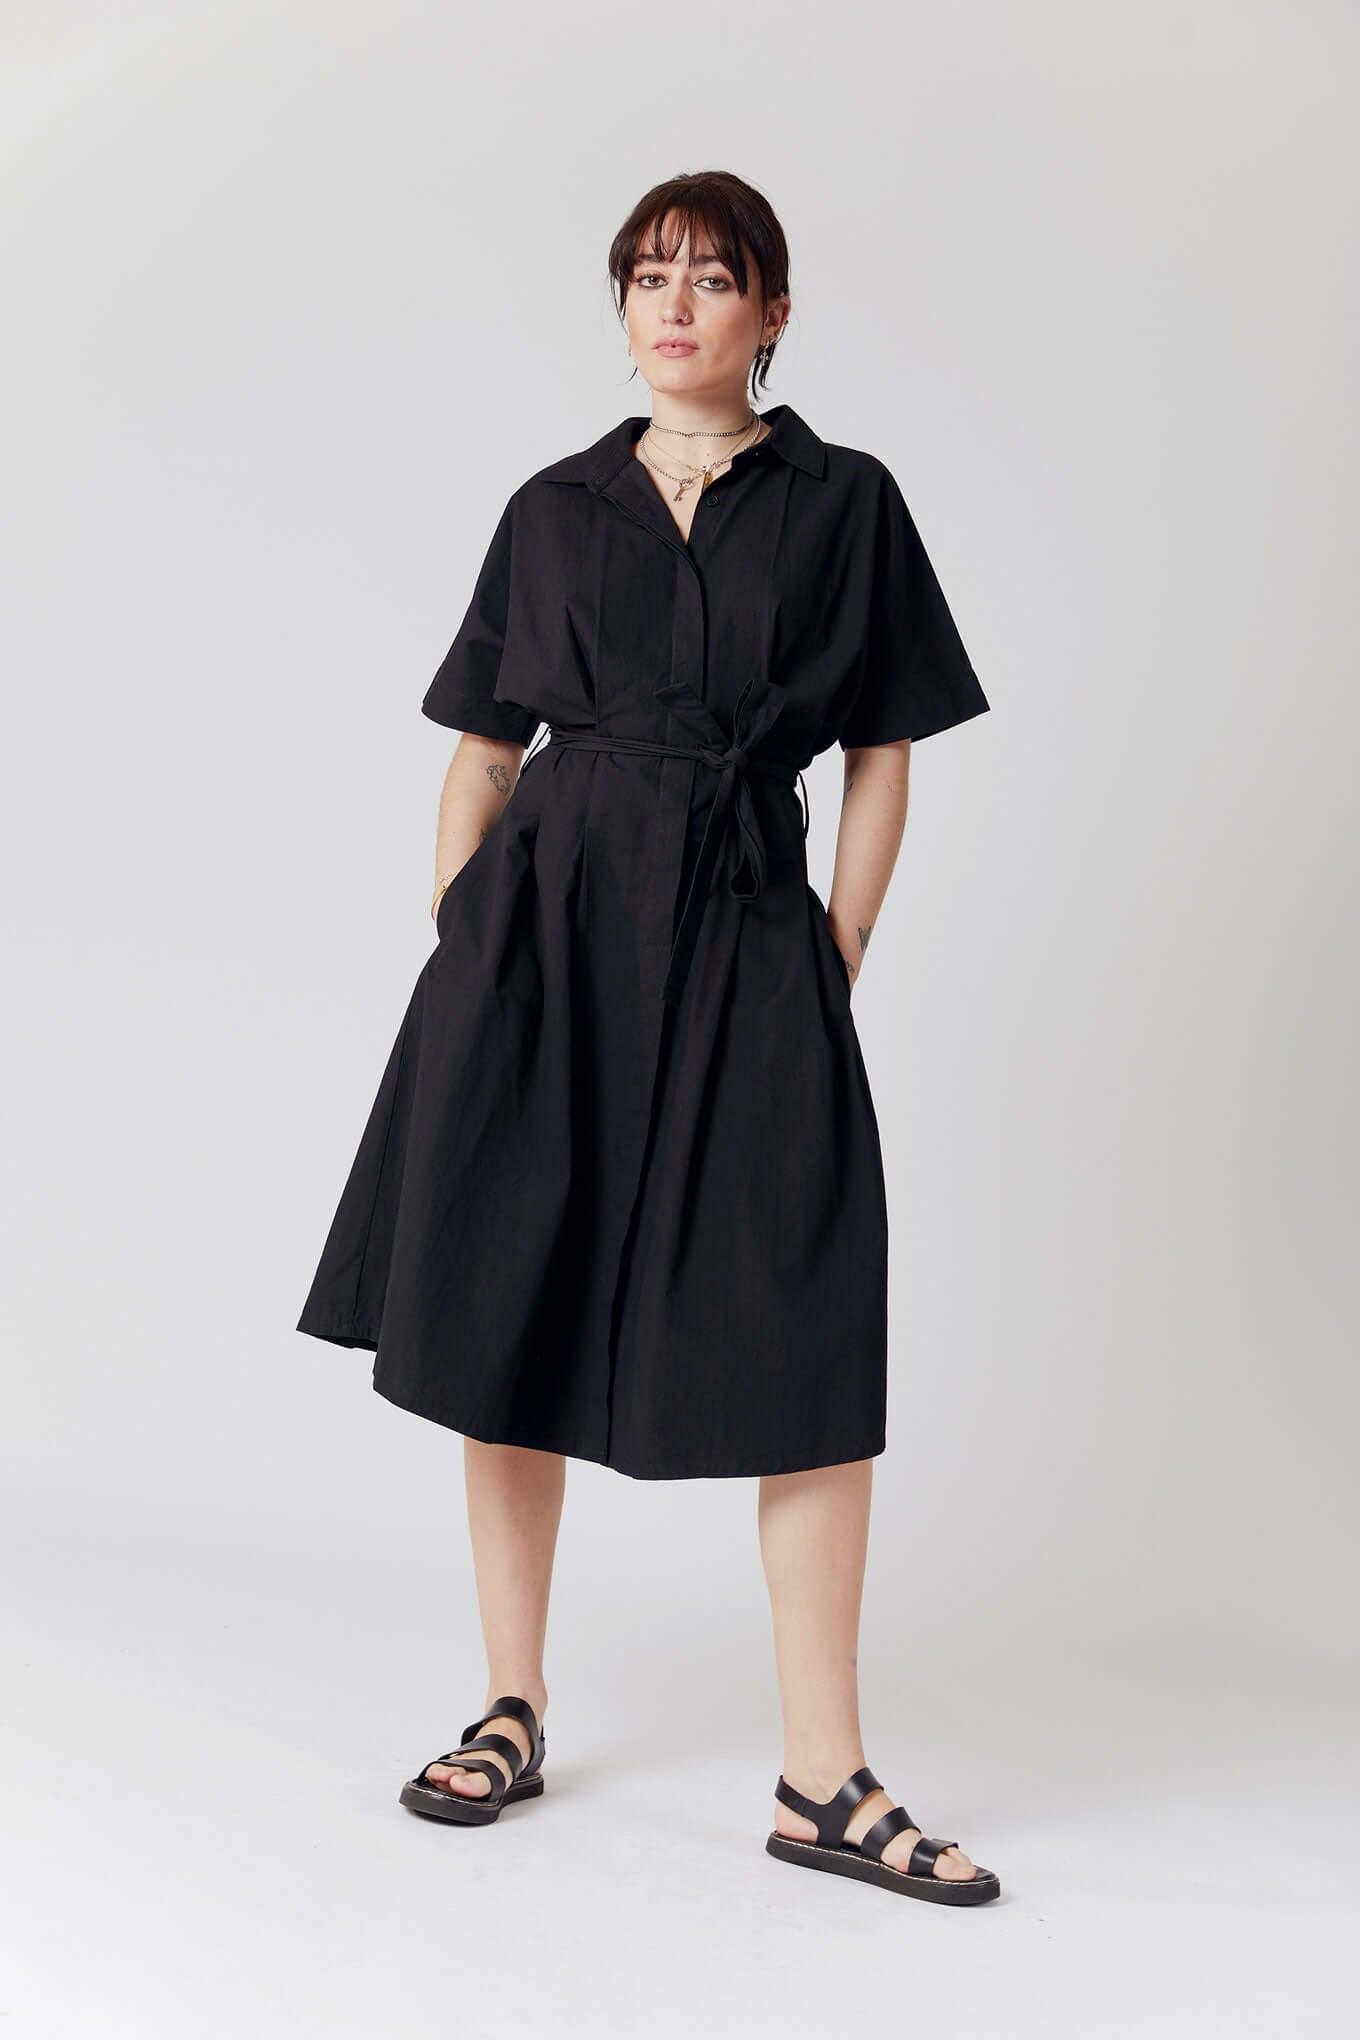 ASHES Organic Cotton Dress Black, SIZE 5 / UK 16 / EUR 44